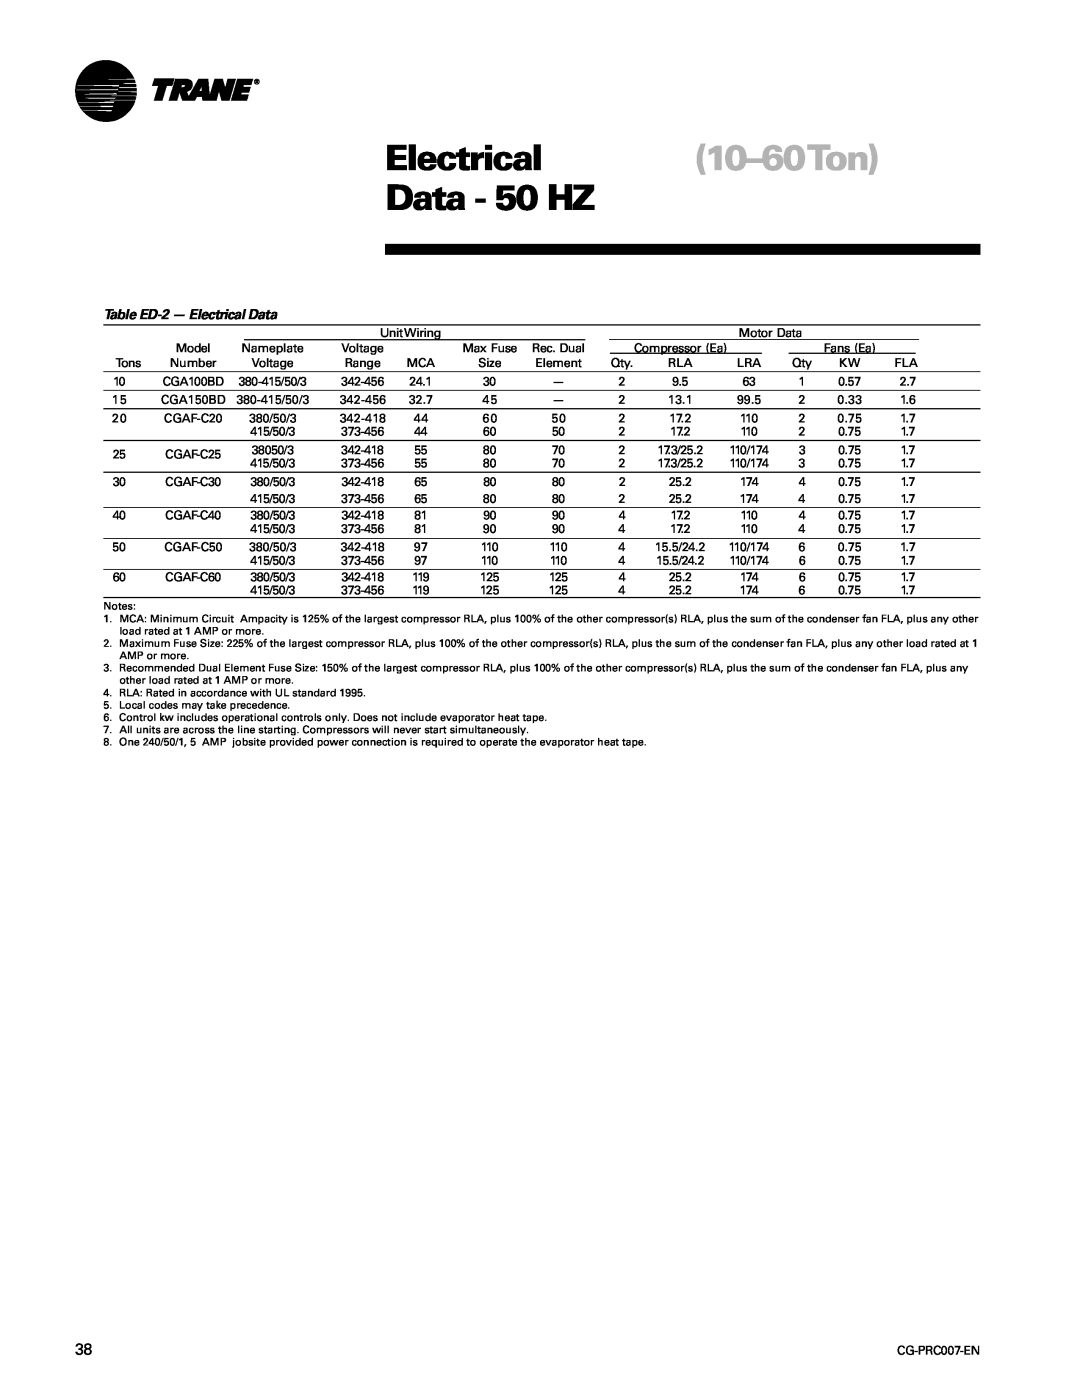 Trane CG-PRC007-EN manual Electrical 10-60Ton Data - 50 HZ, Table ED-2— Electrical Data 